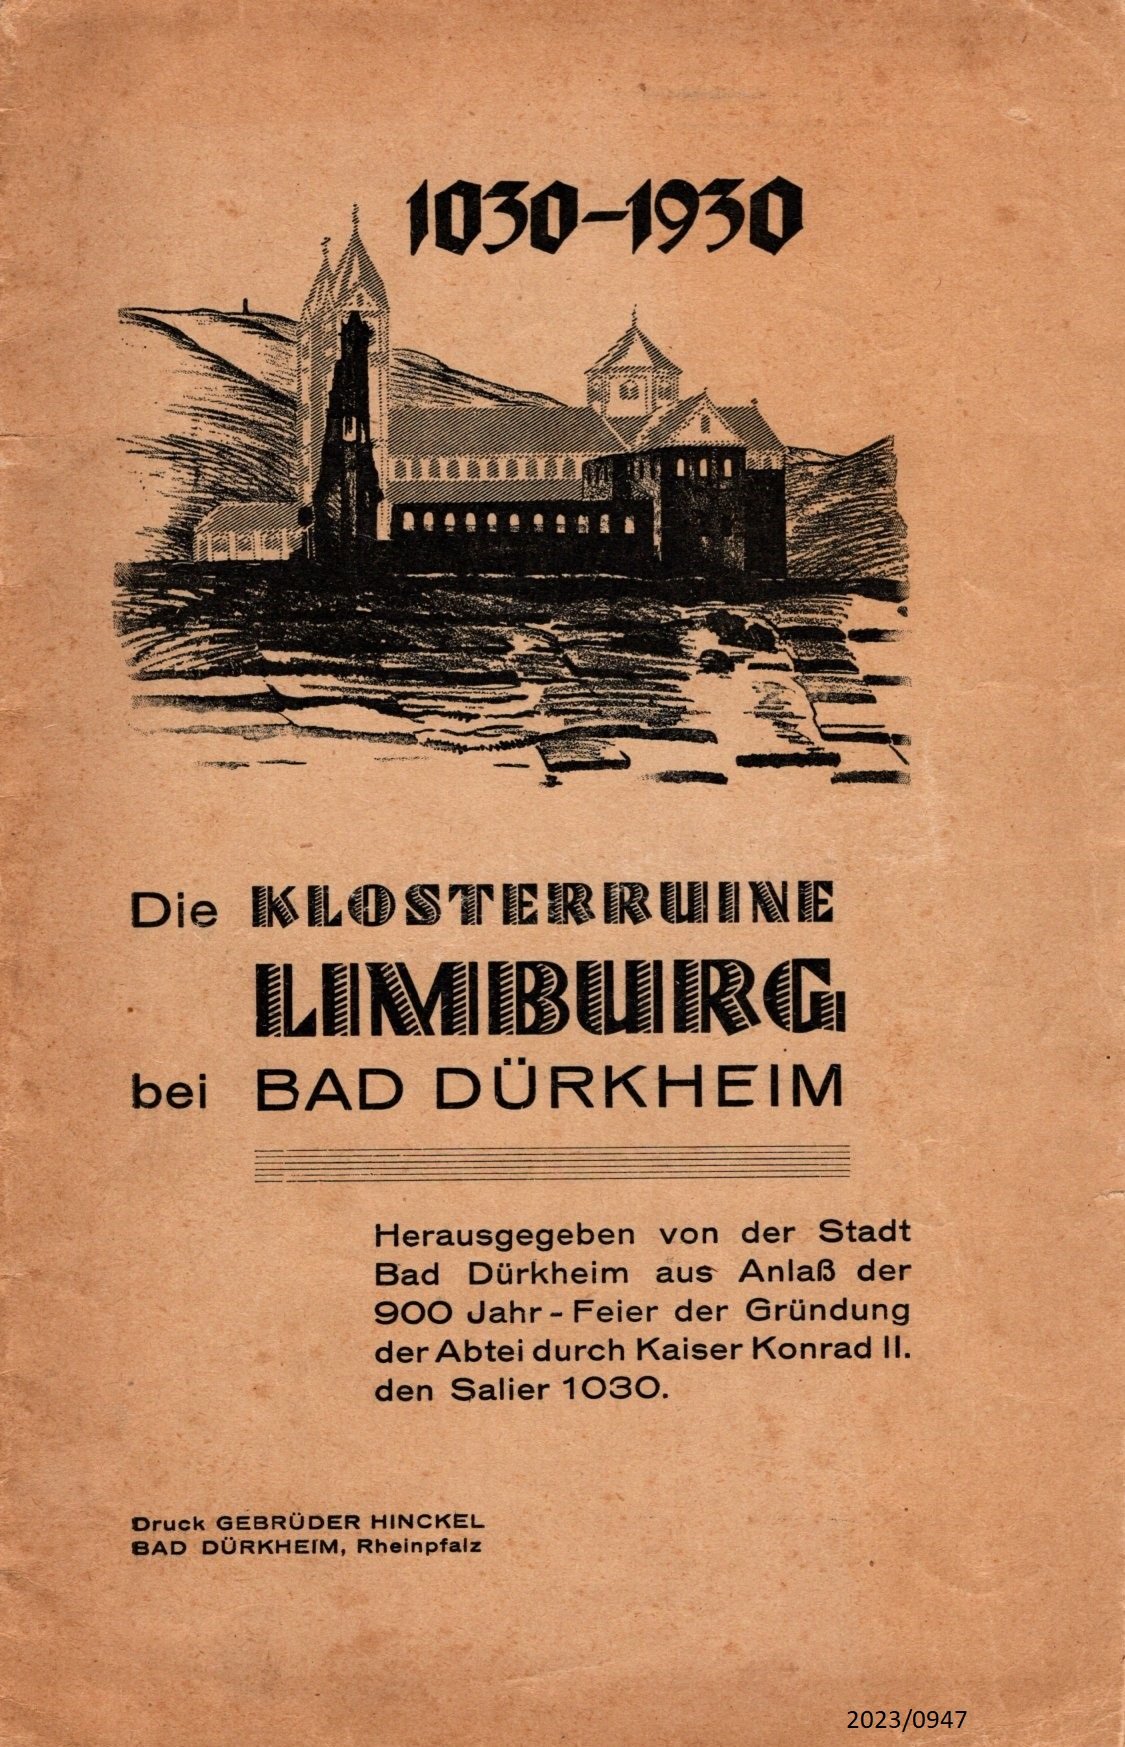 1030 - 1930 Die Klosterruine Limburg (Stadtmuseum Bad Dürkheim im Kulturzentrum Haus Catoir CC BY-NC-SA)